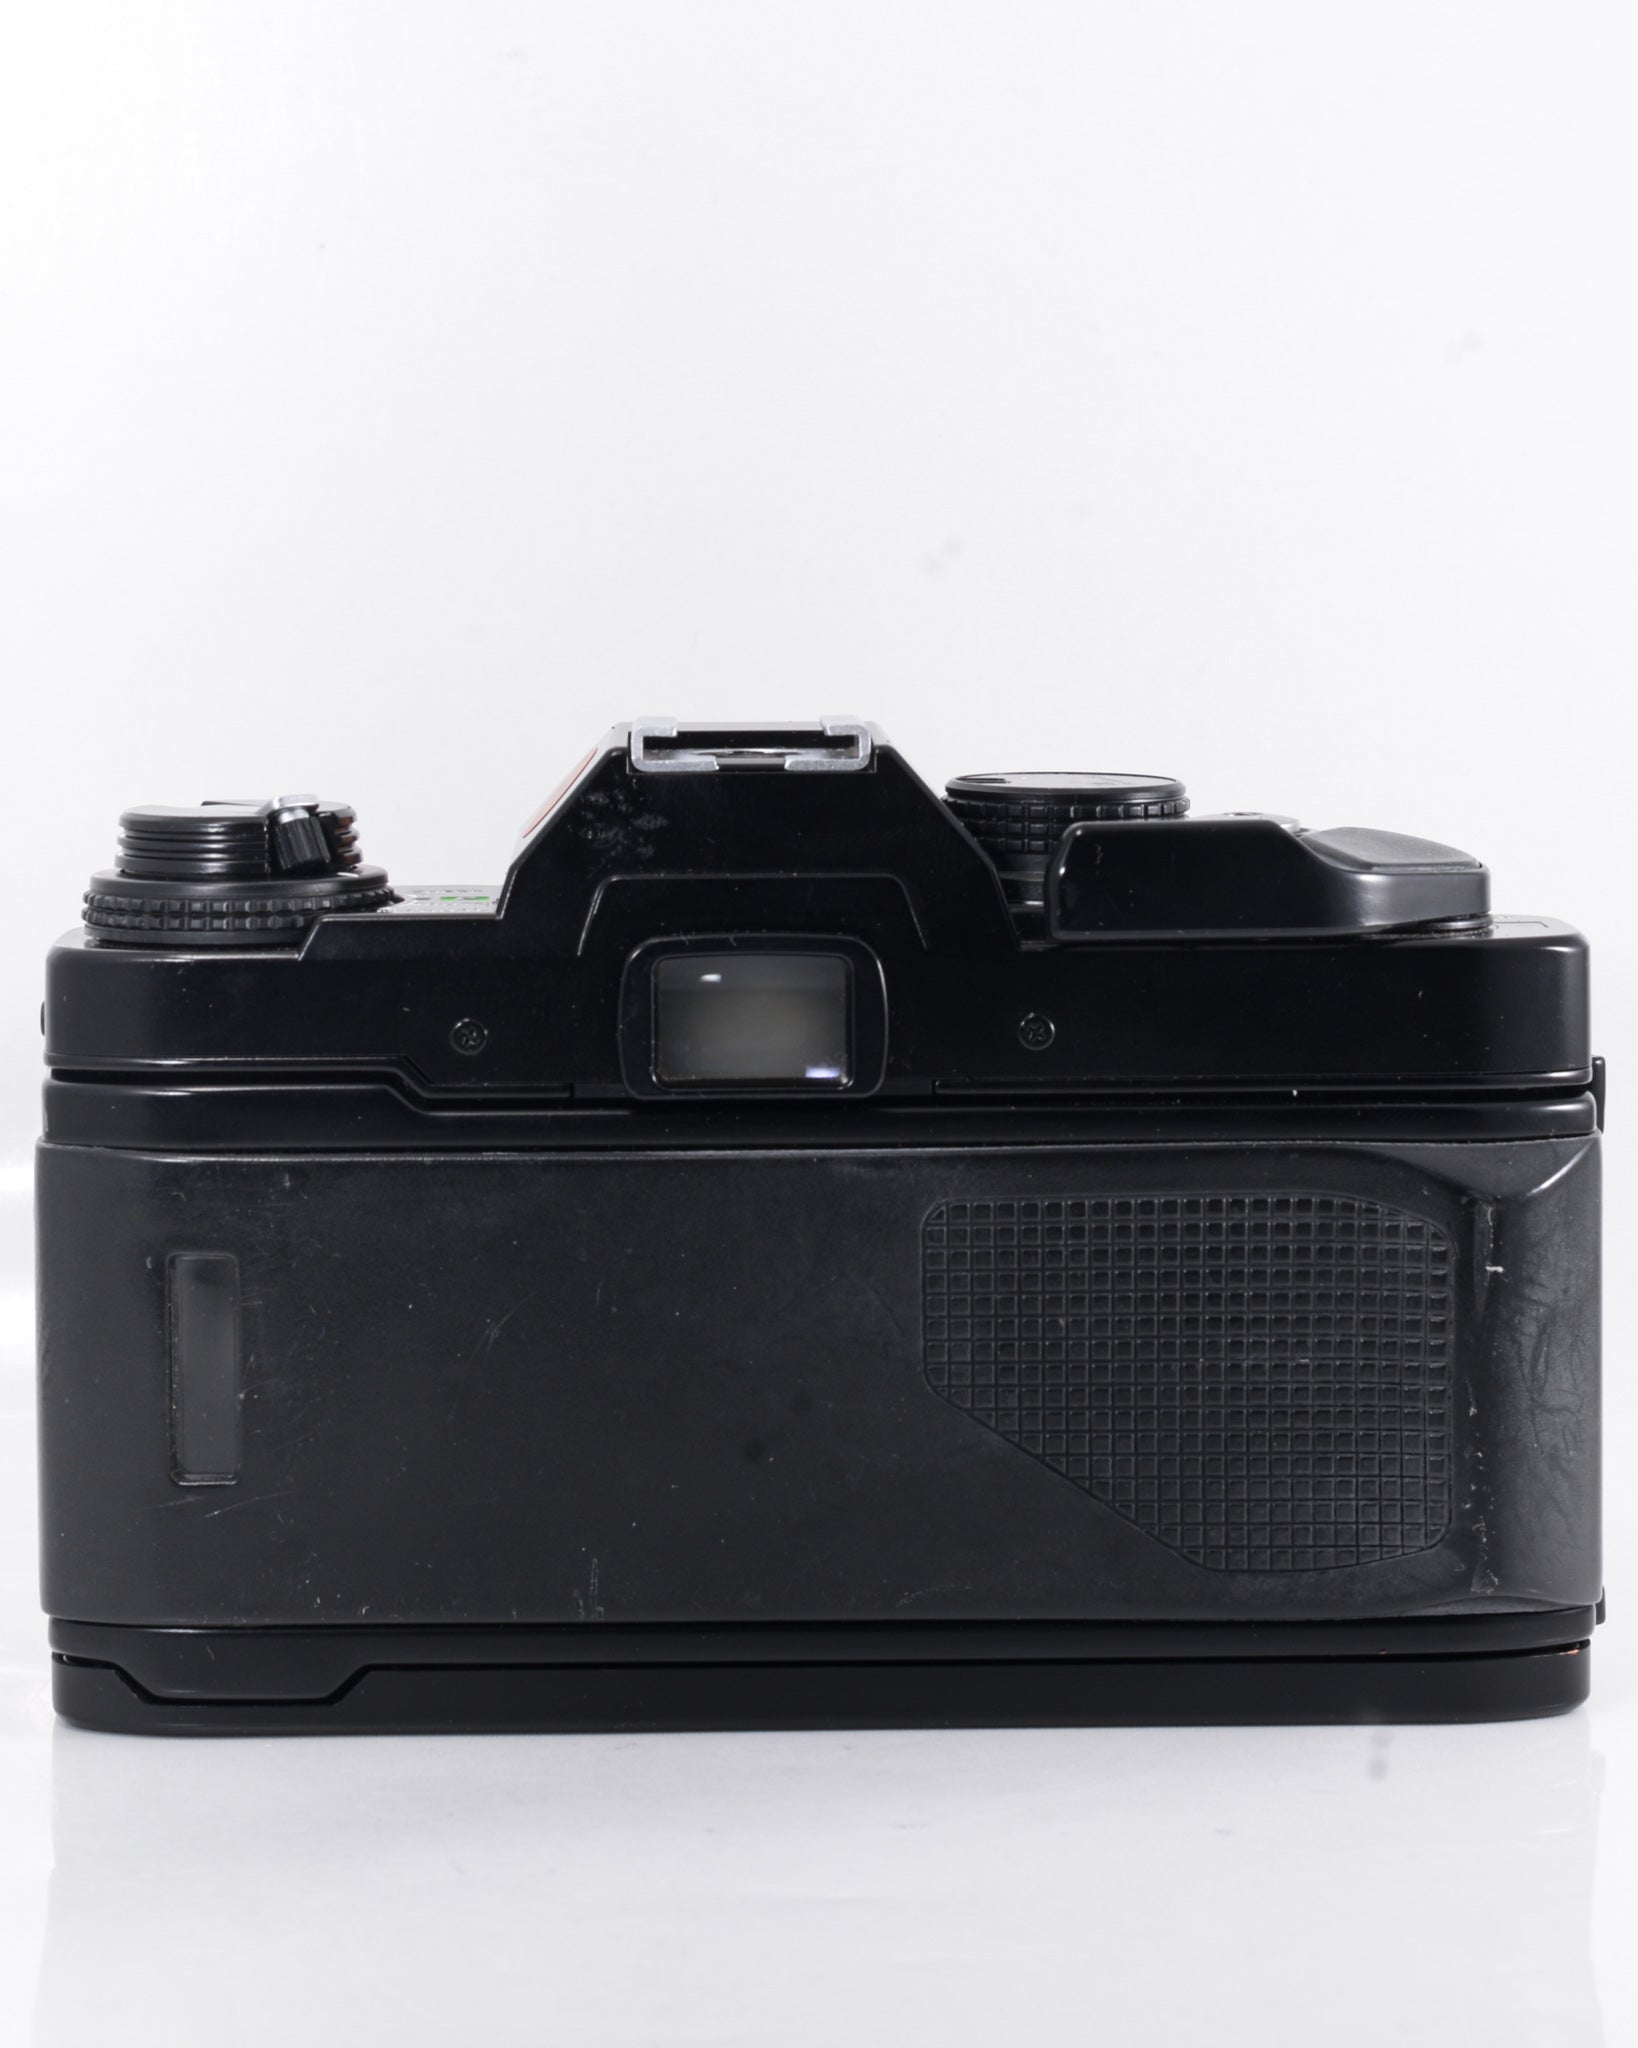 Olympus OM40 Program 35mm SLR film camera with 35-70mm lens